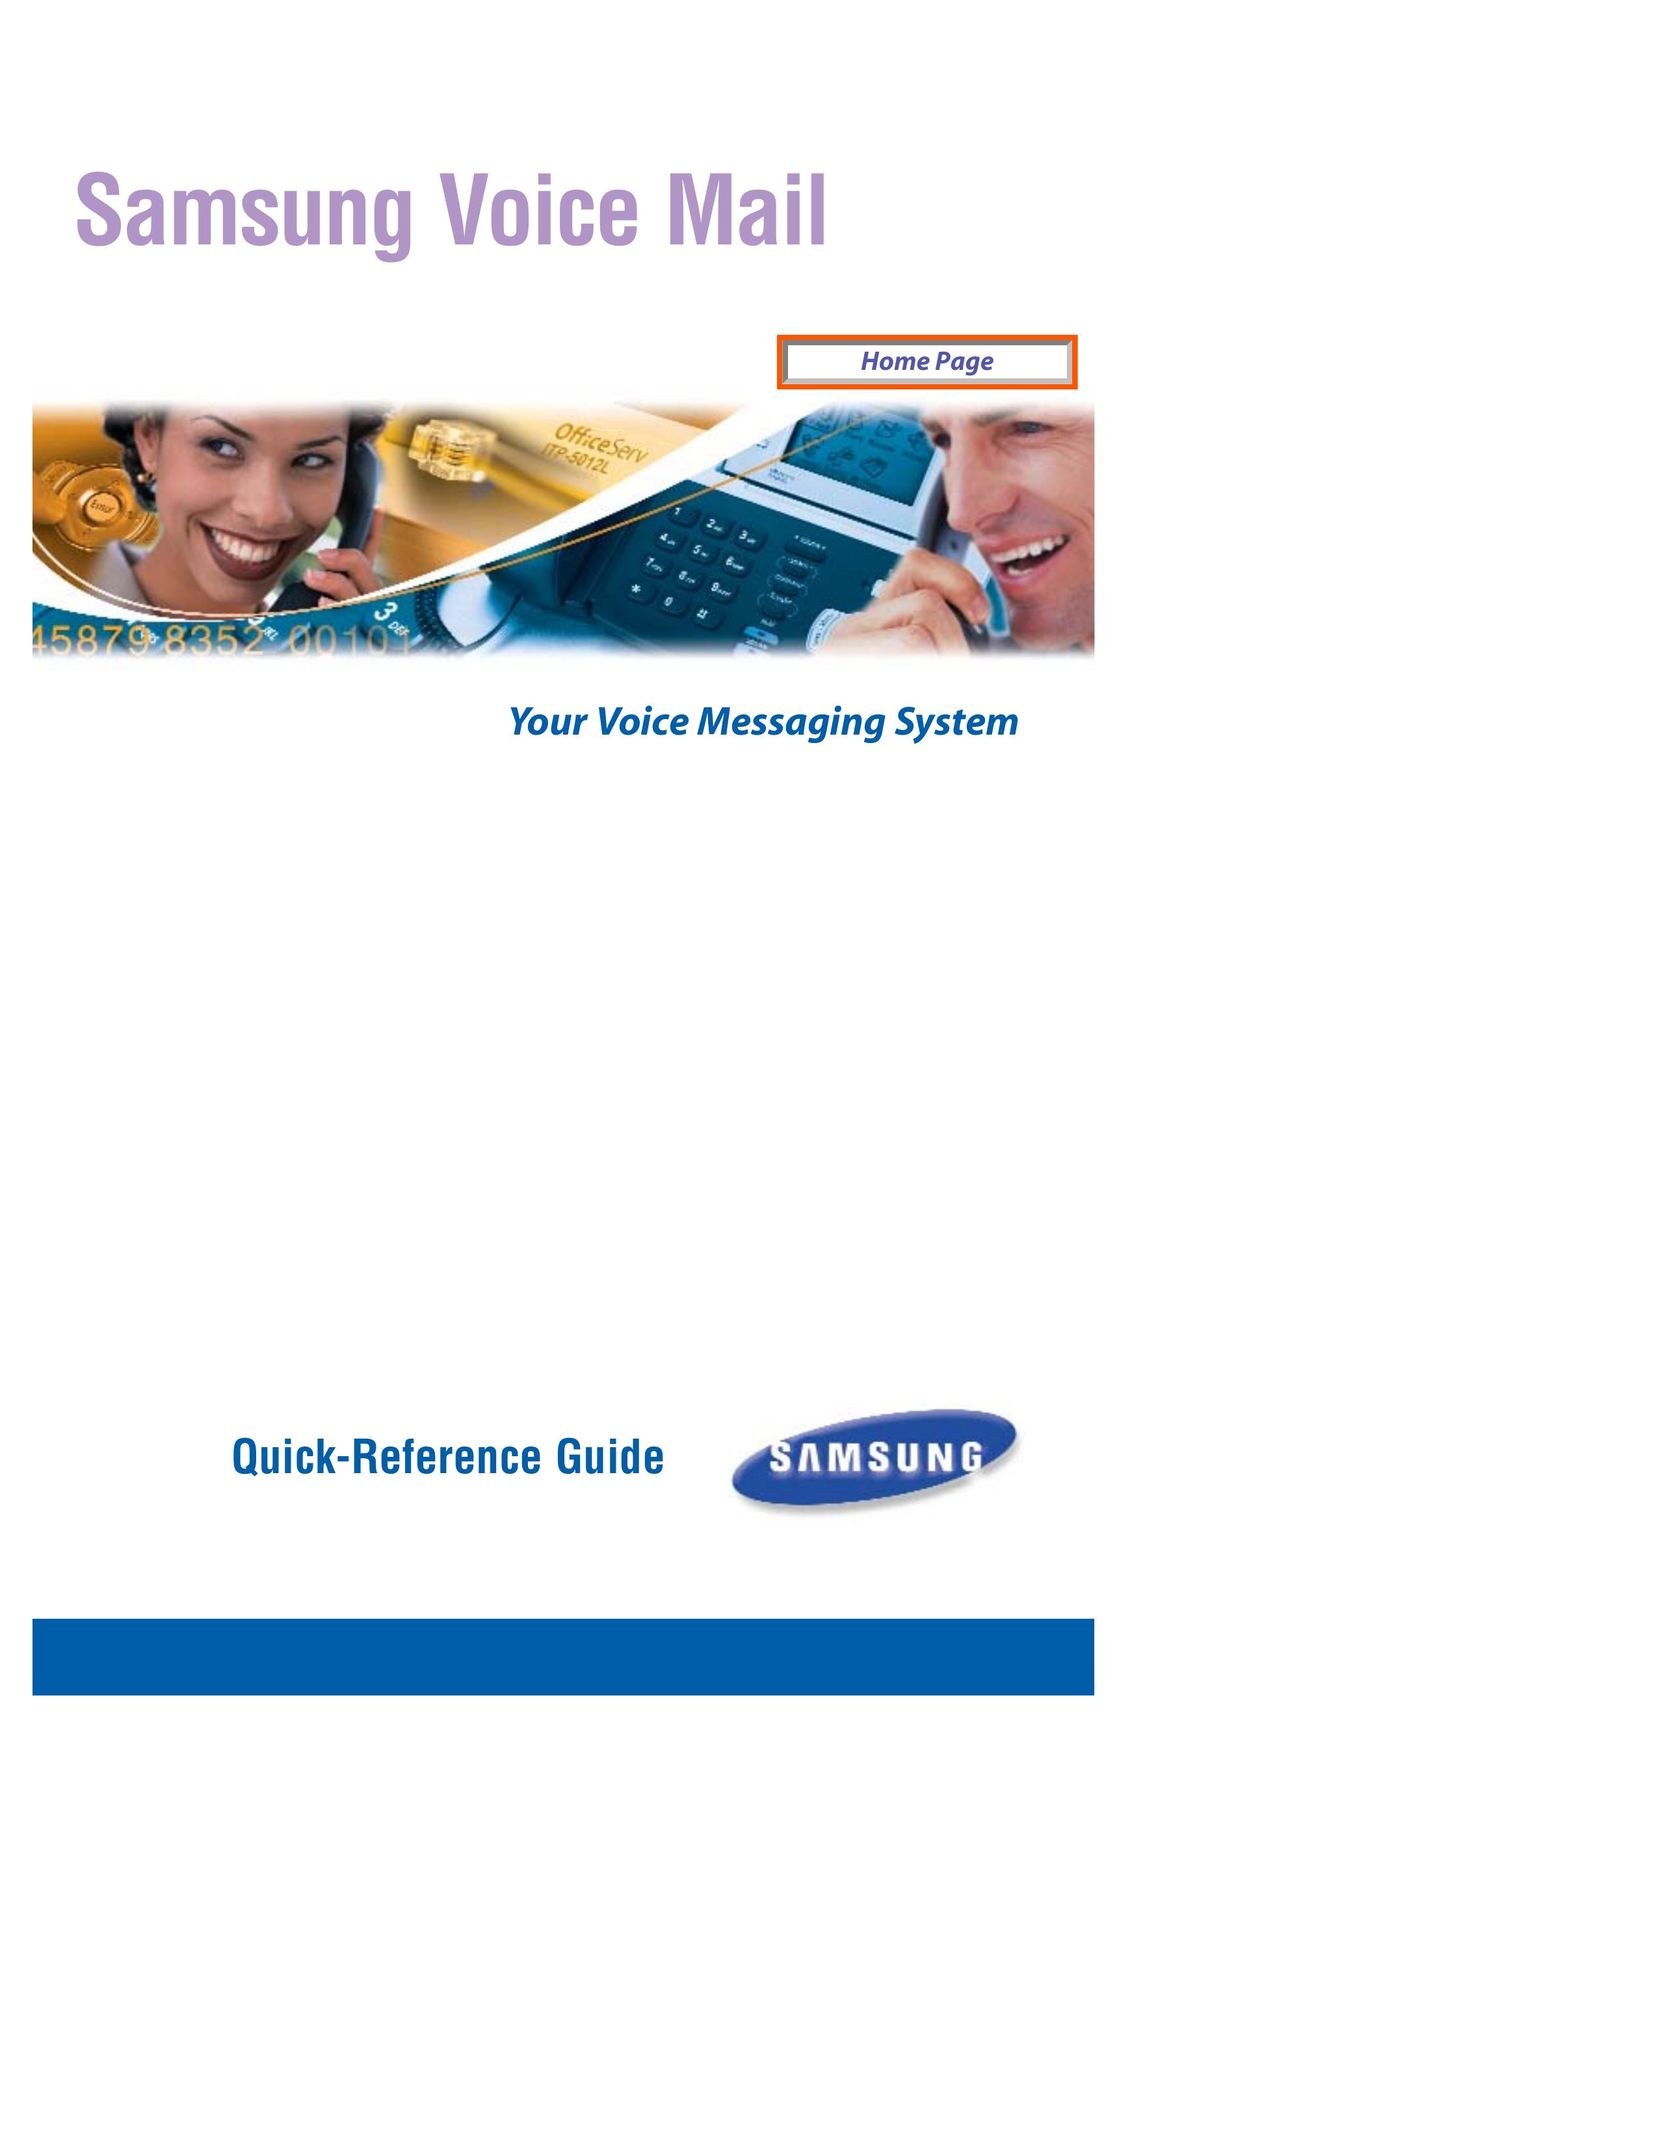 Samsung SVMi-2E Answering Machine User Manual